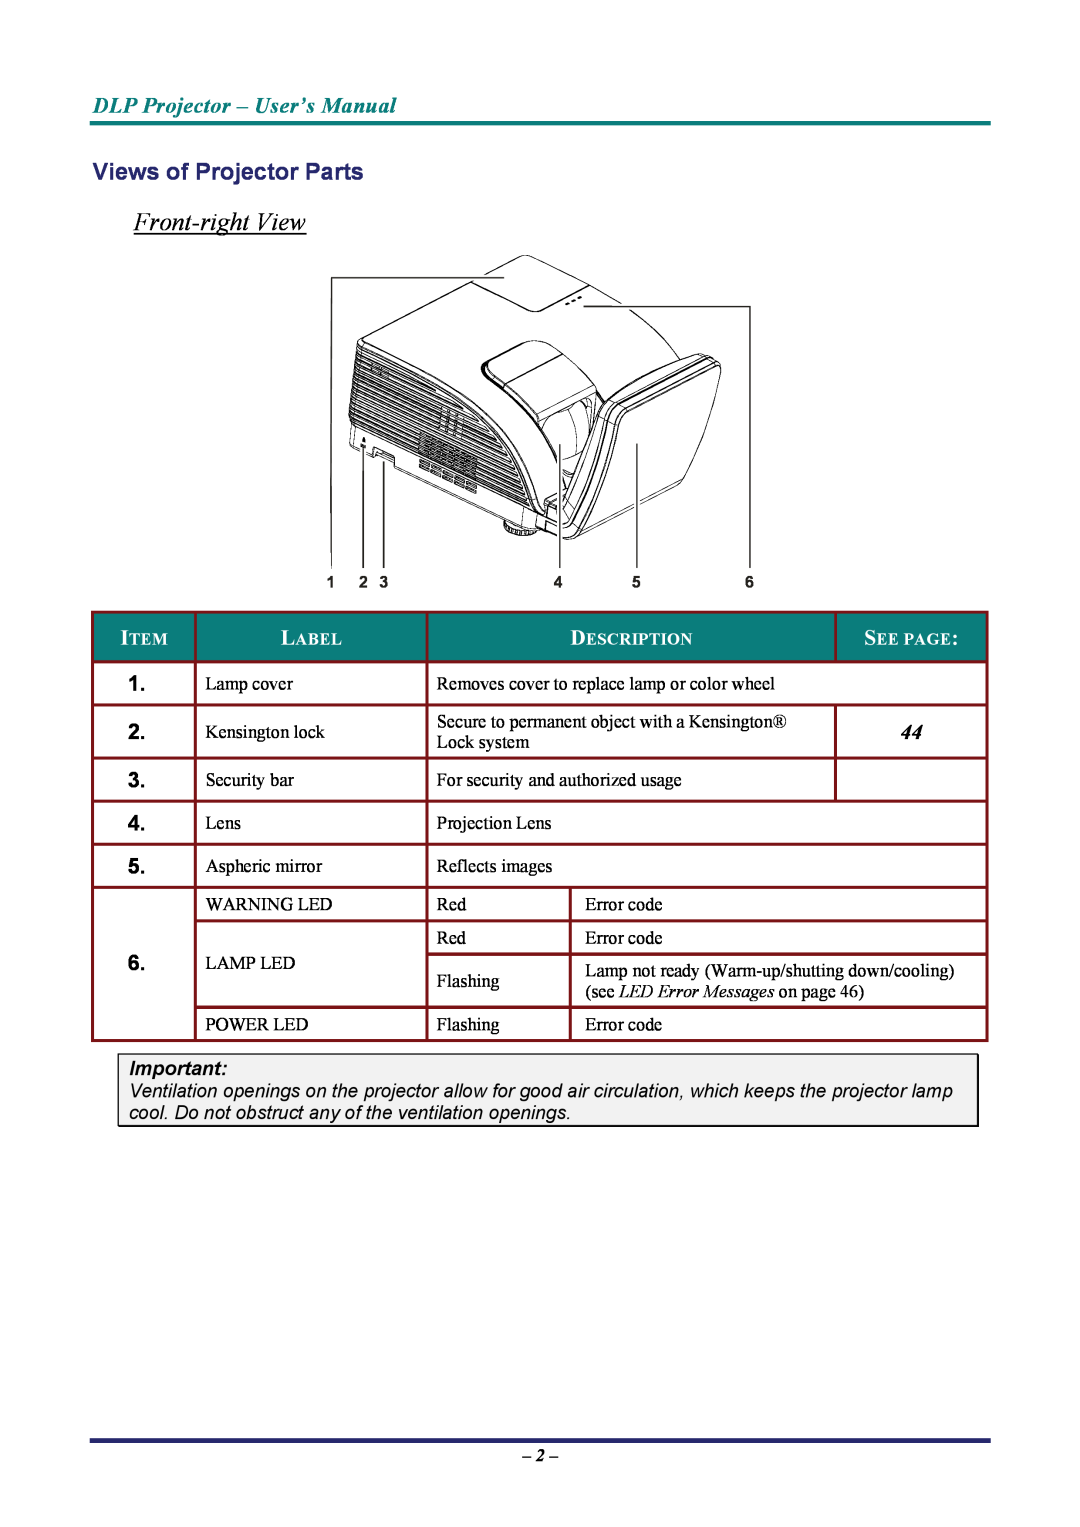 Vivitek D7 Front-right View, Views of Projector Parts, DLP Projector - User’s Manual, Label, Description, See Page 